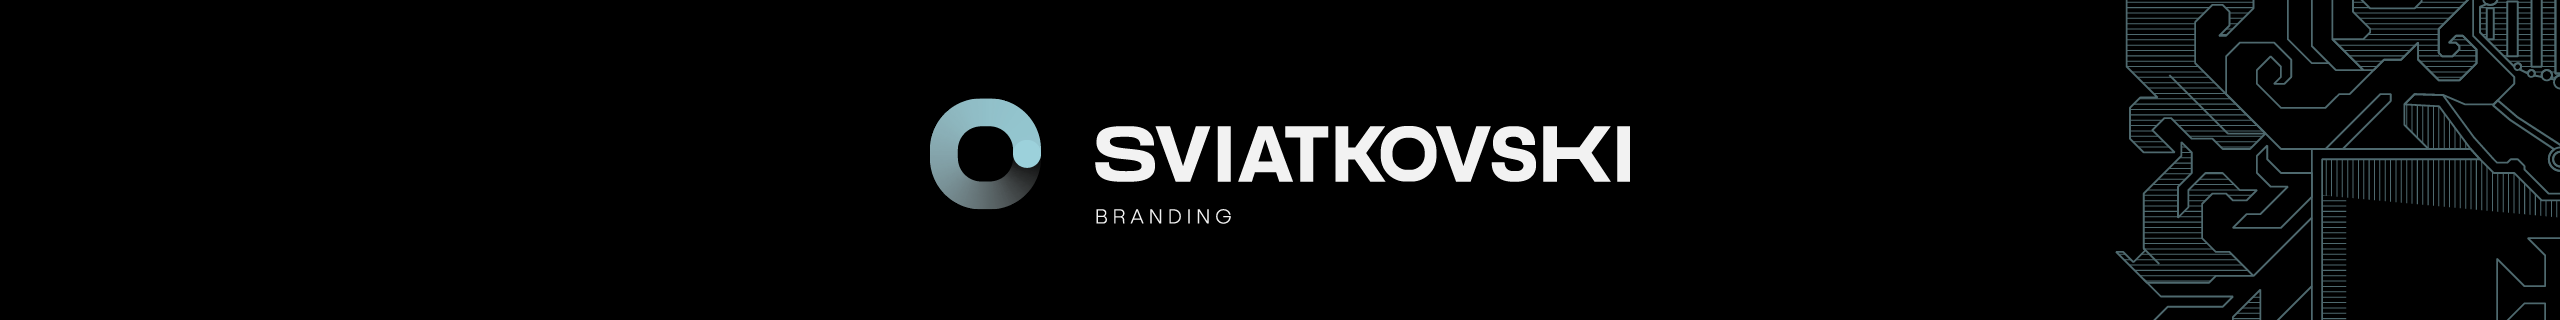 Nazari Sviatkovski's profile banner